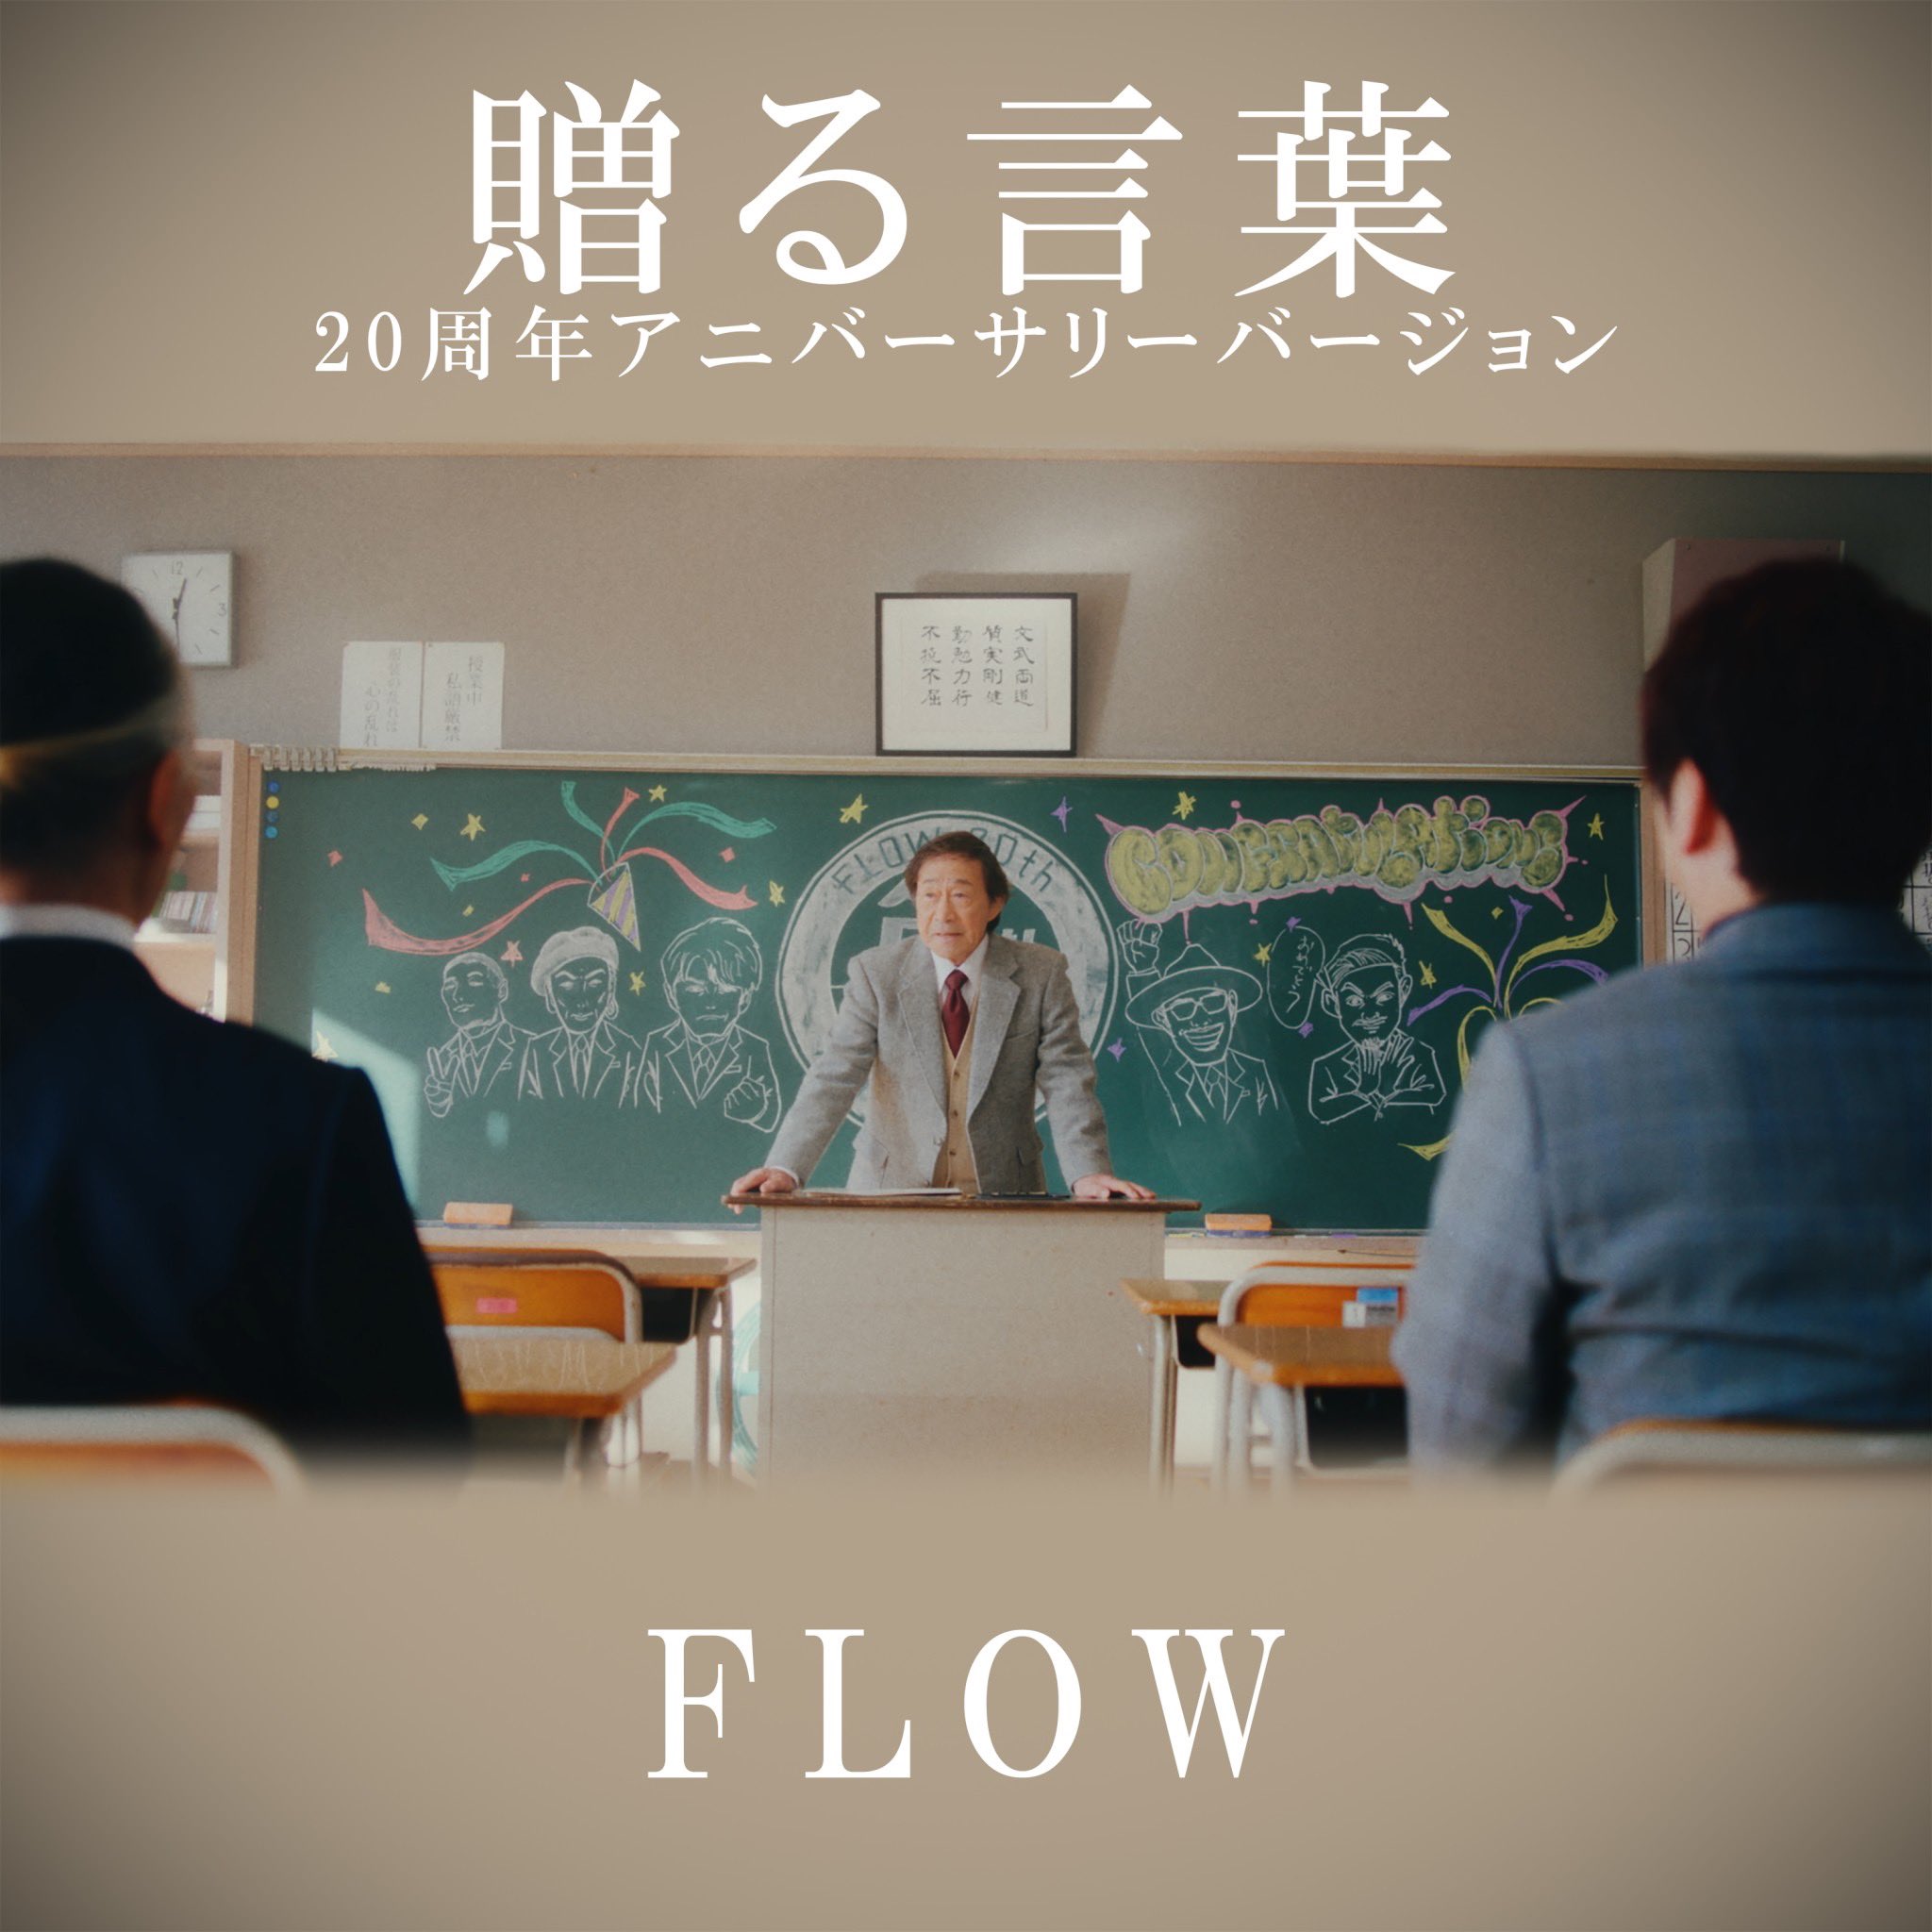 FLOW - 贈る言葉 (20周年アニバーサリーバージョン)